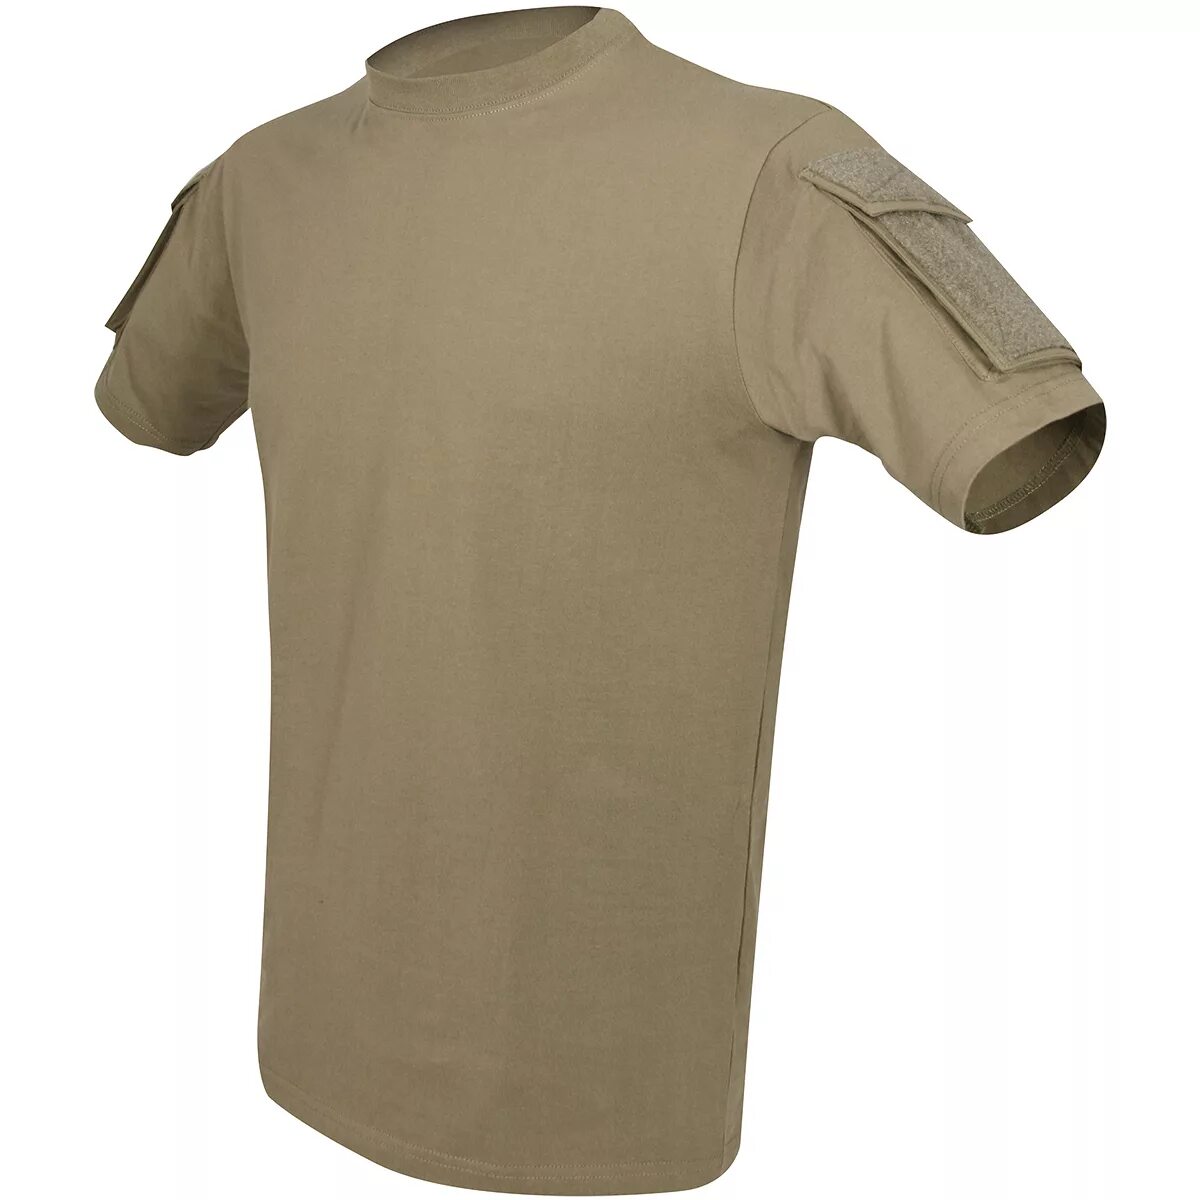 Футболка тактическая Кондор tpstr03 олива. Футболка с карманами на рукавах MFH us t-Shirt, 170g/m?, цвет - Coyote. Тактическая рубашка койот. Тактическая футболка койот.